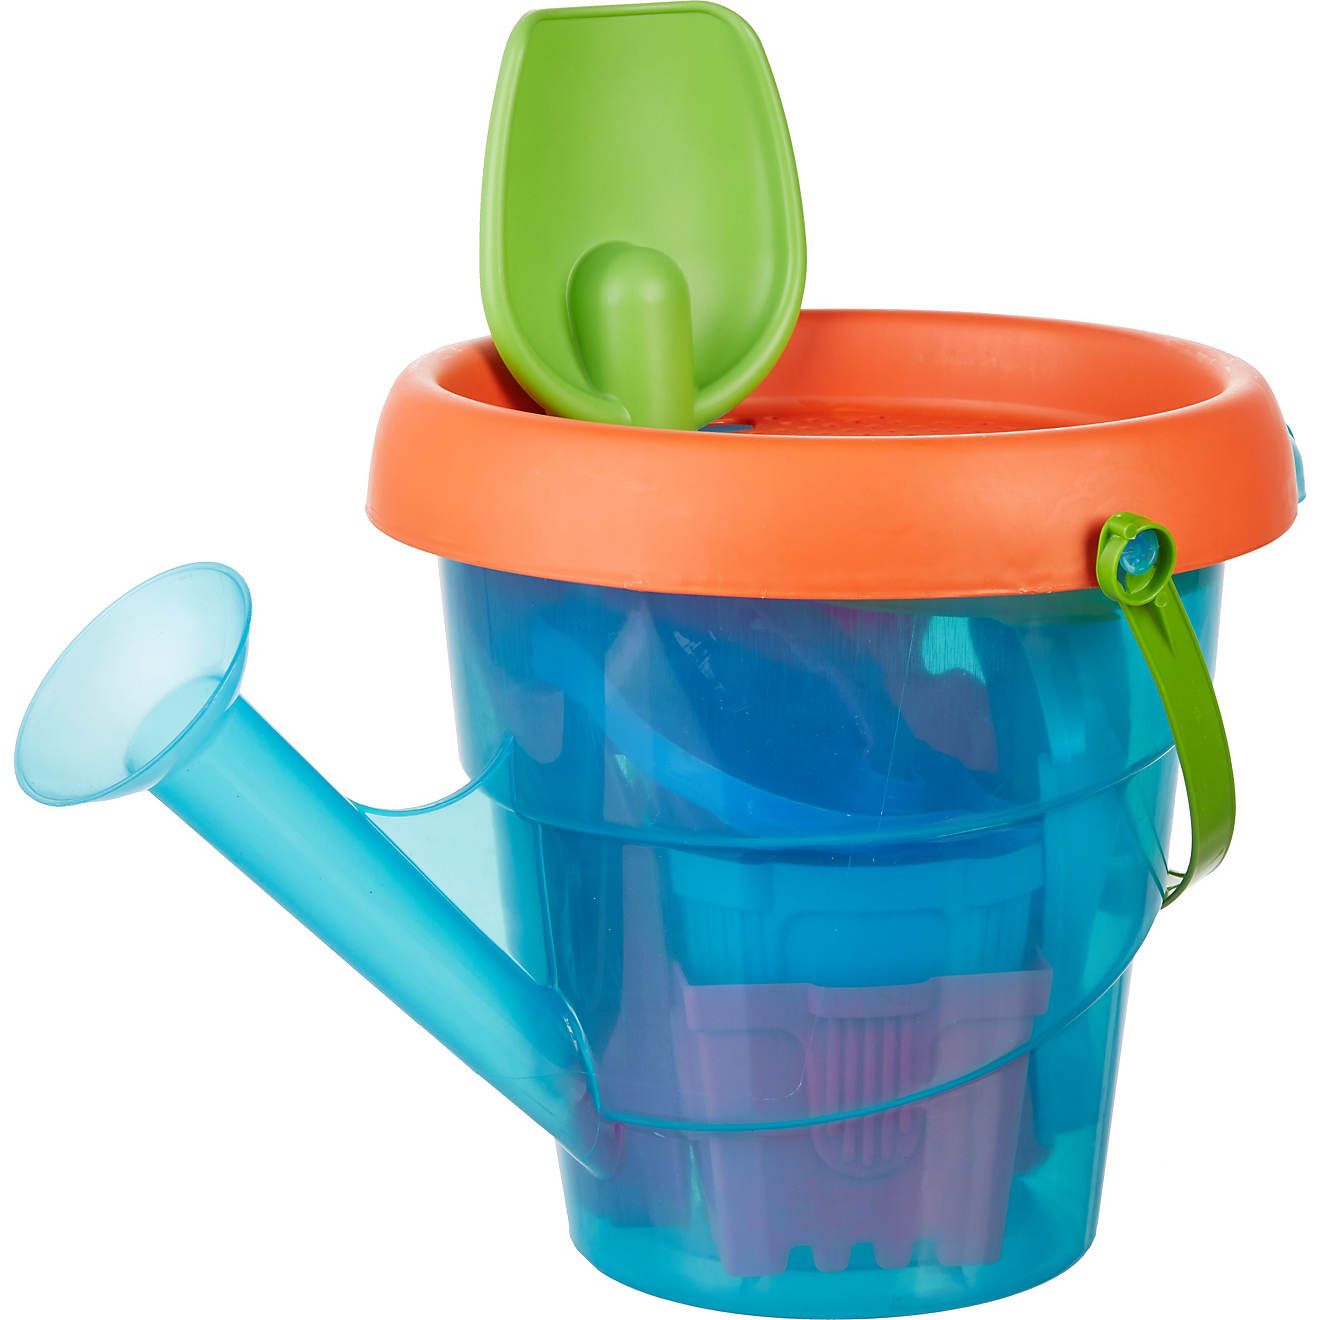 American Plastic Toys Sprinkler Bucket Set | Academy Sports + Outdoor Affiliate